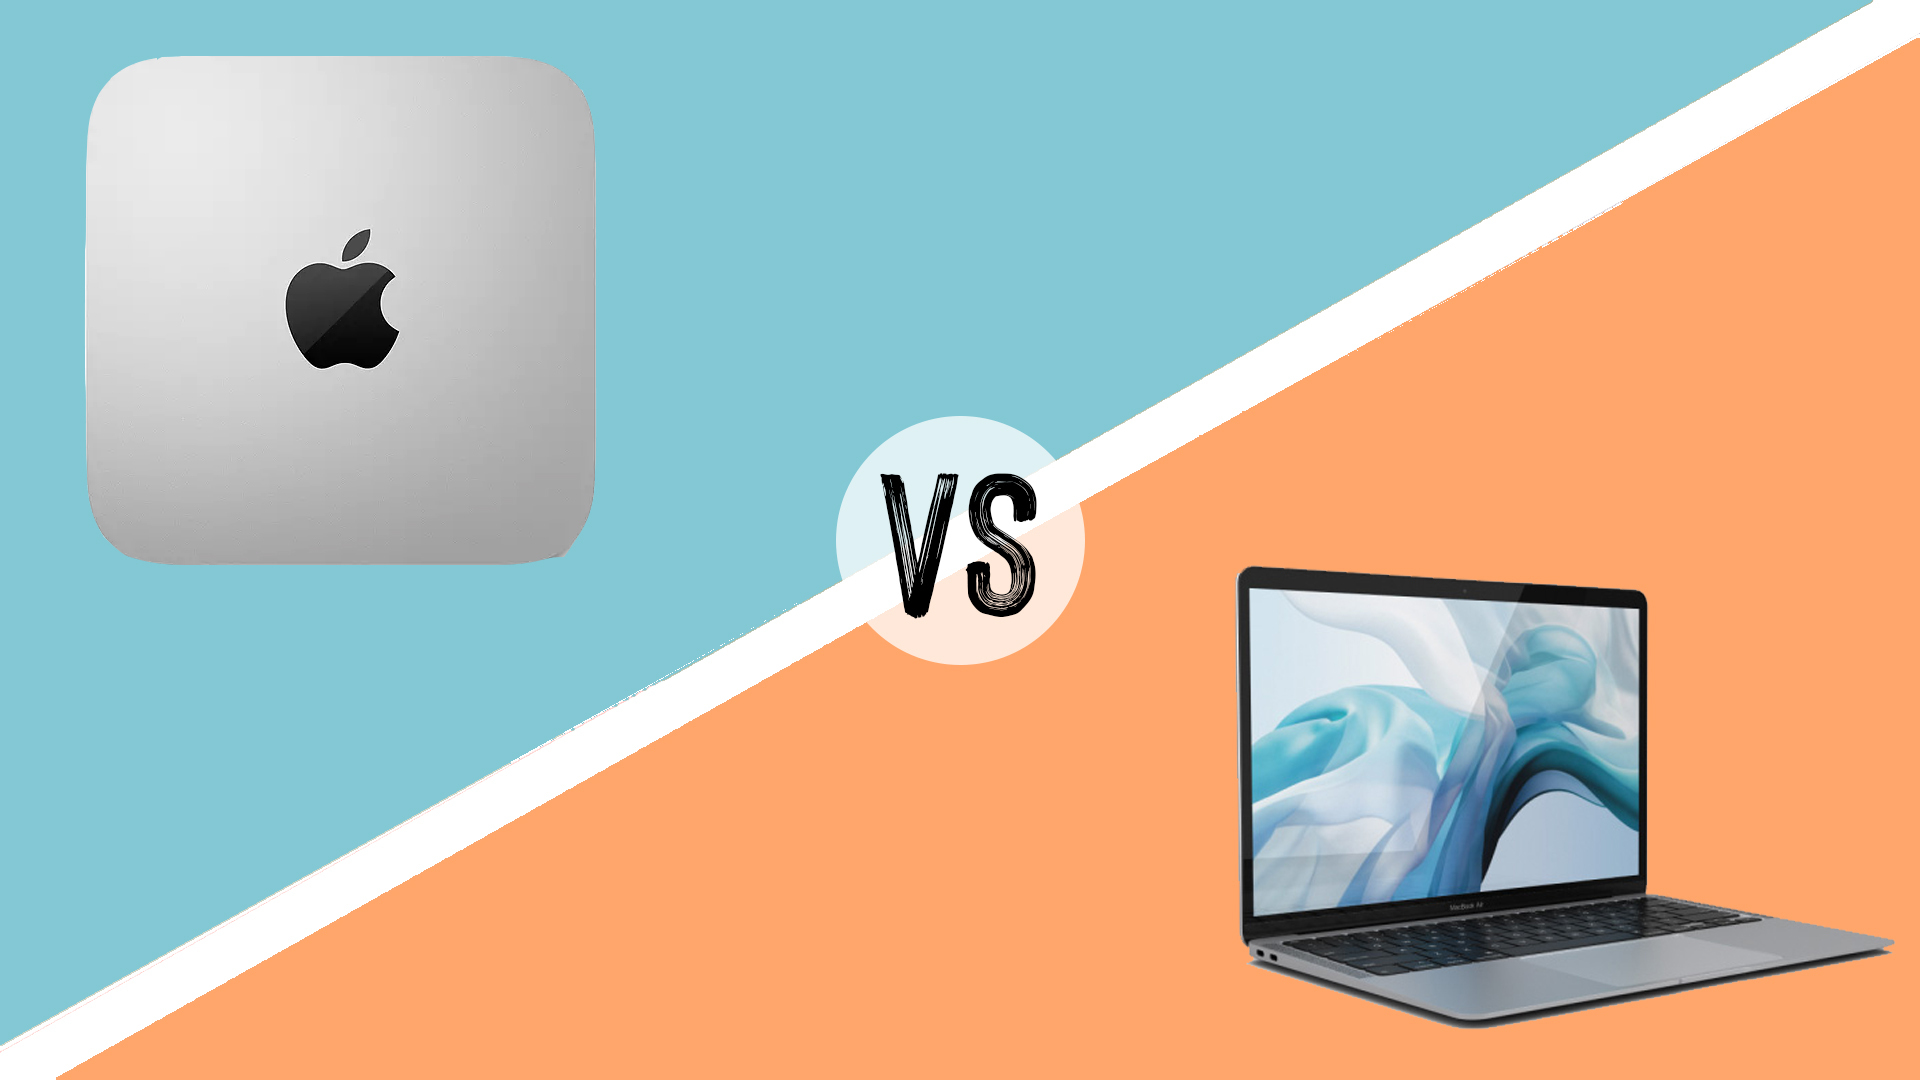 Apple Mac Studio vs Mac Mini vs Mac Pro: What's the difference?